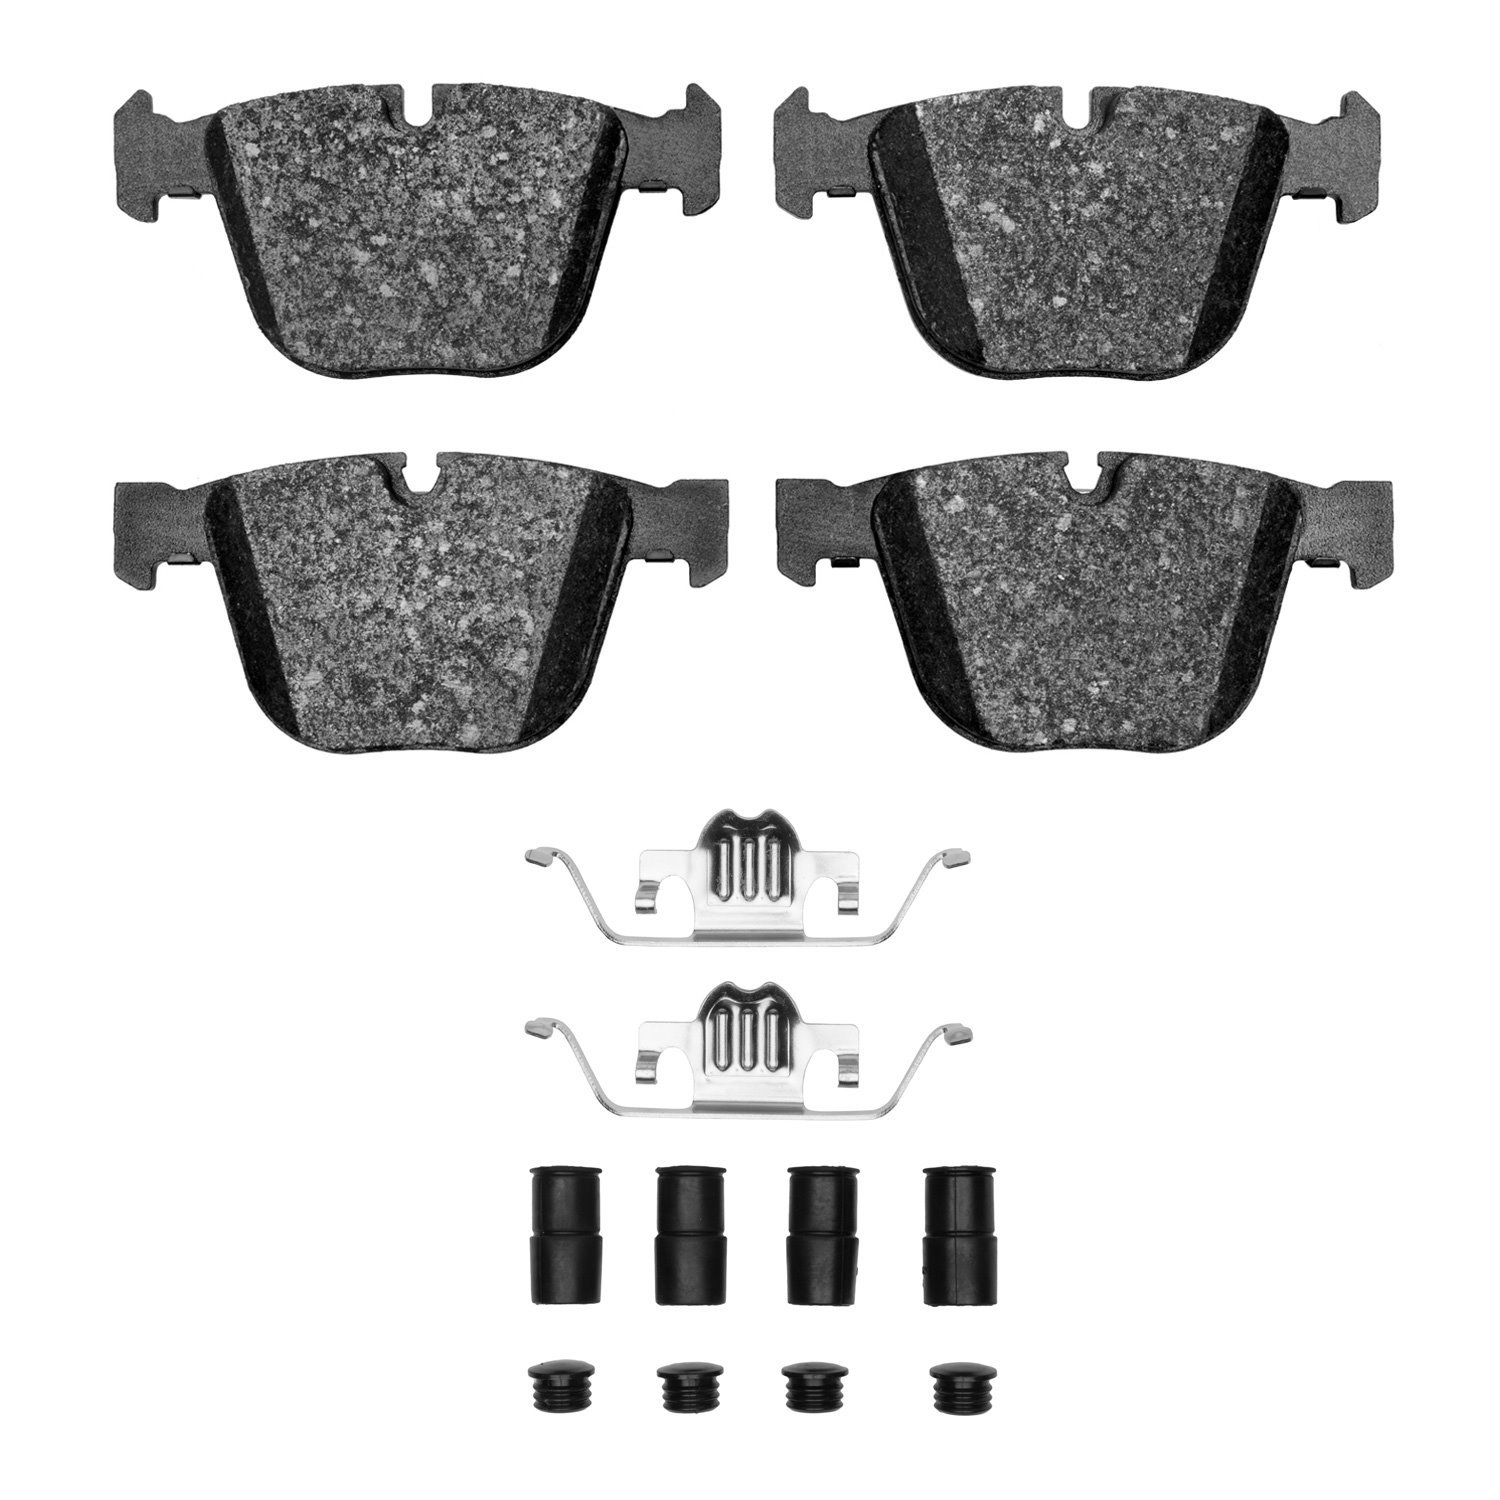 1551-0919-22 5000 Advanced Low-Metallic Brake Pads & Hardware Kit, 2010-2019 BMW, Position: Rear